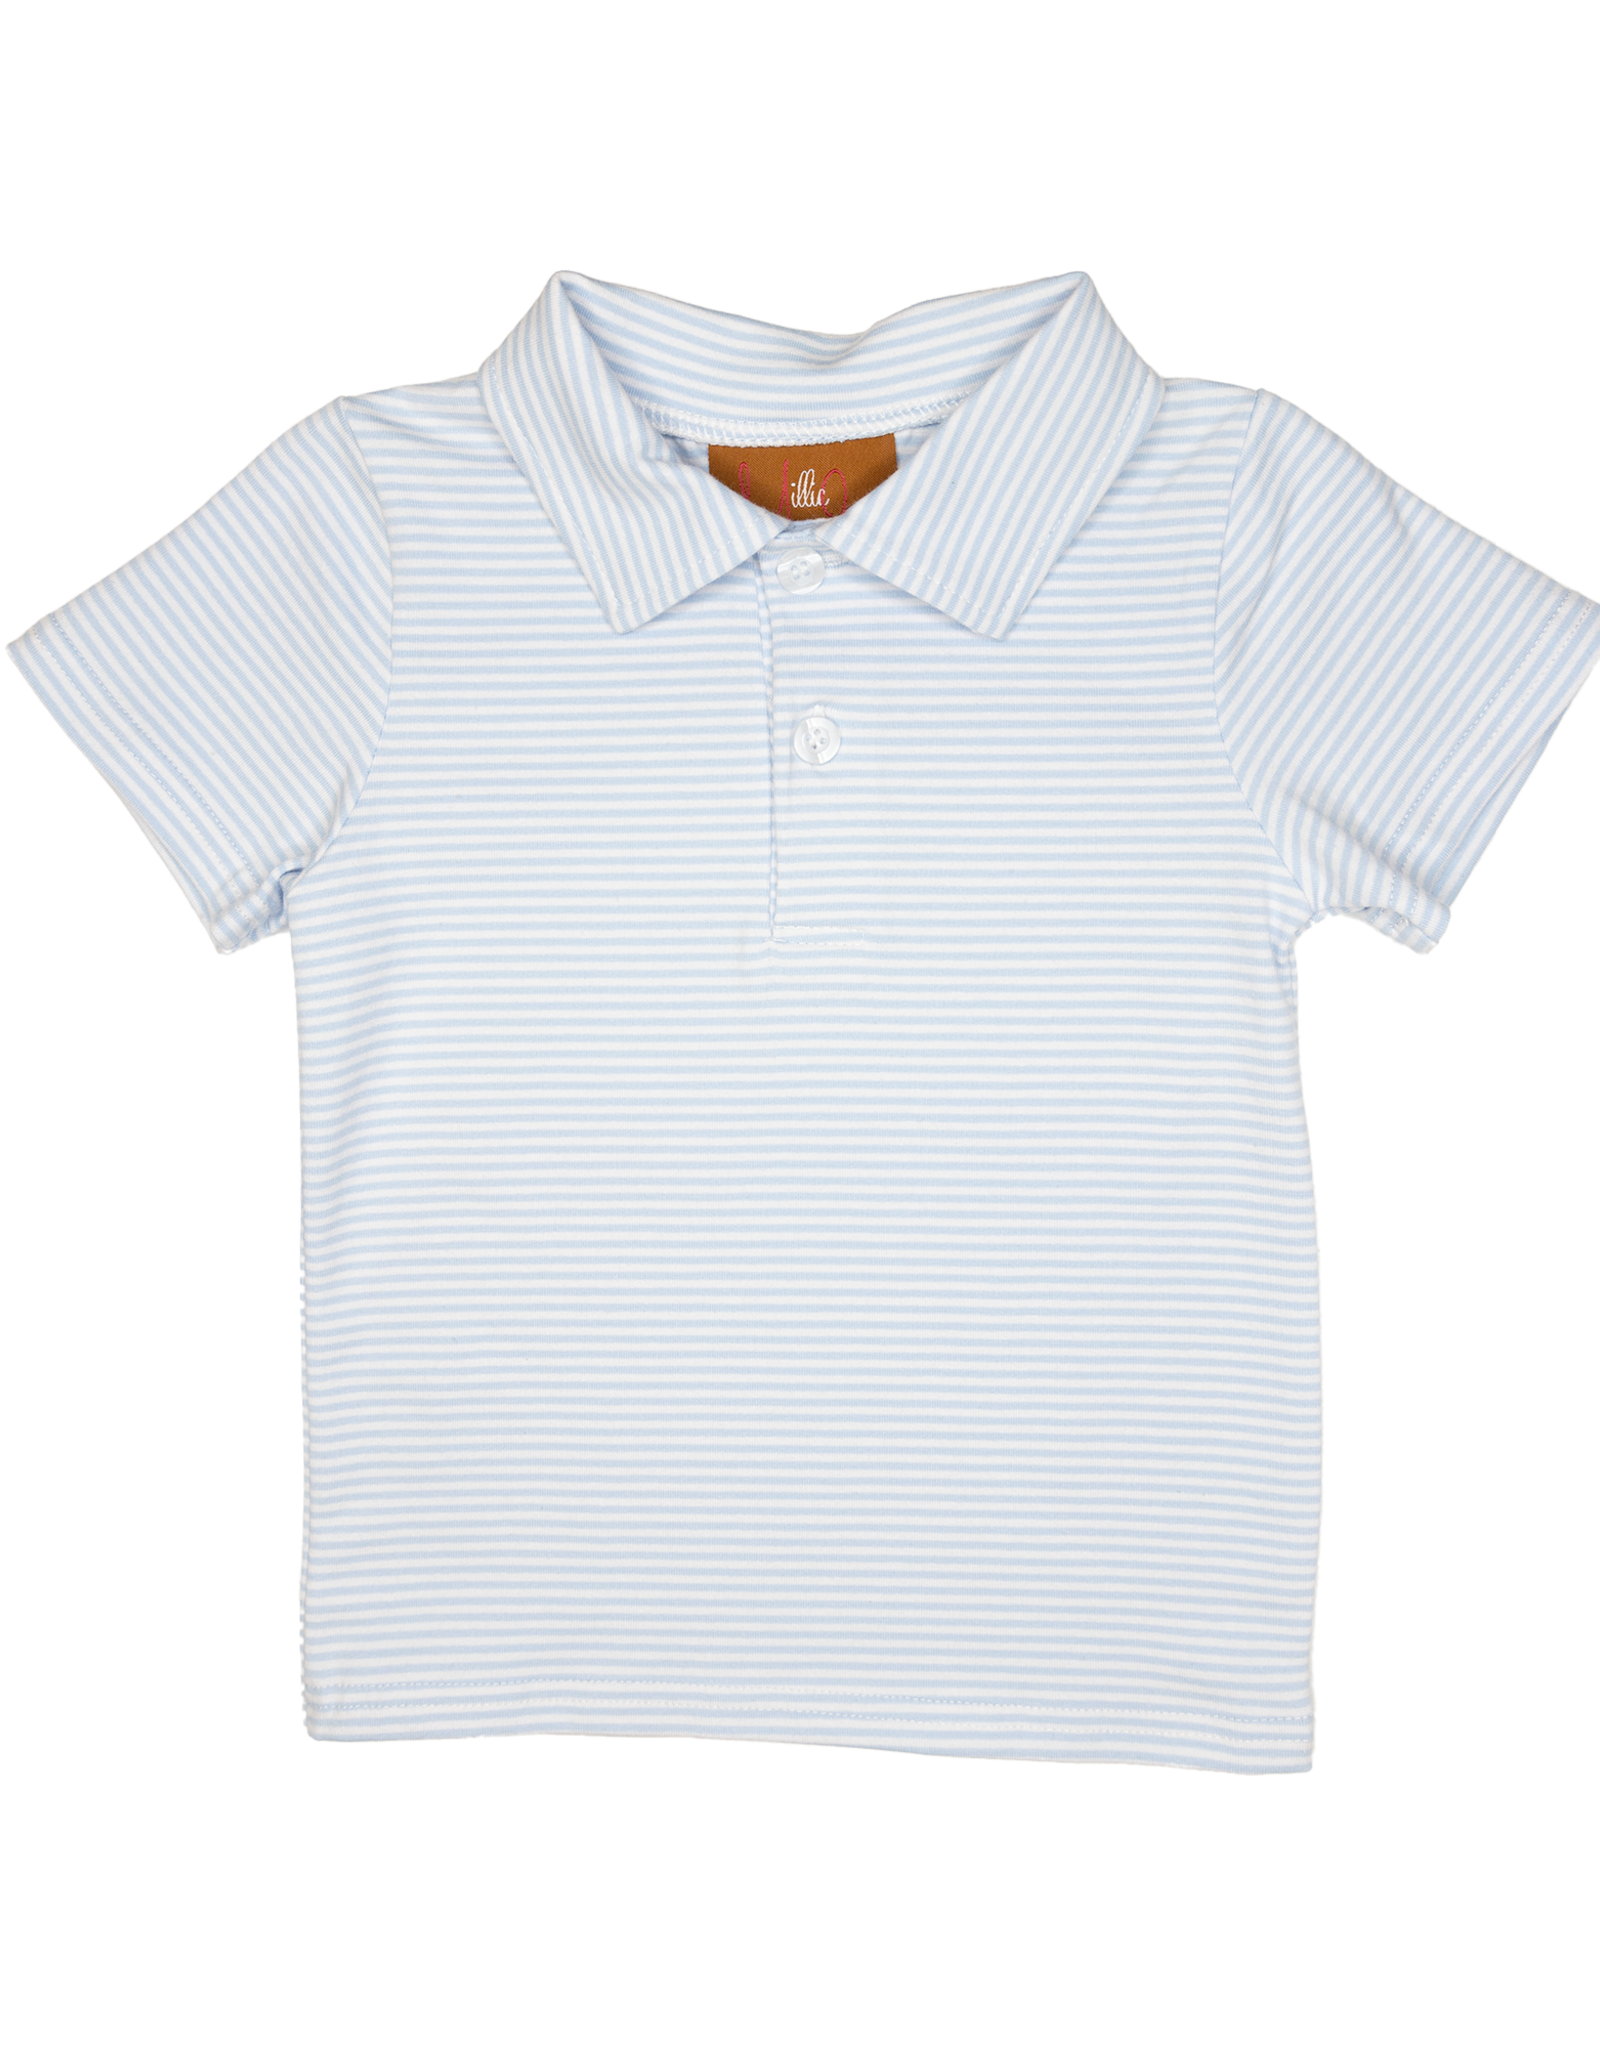 Millie Jay 687 Bennett SS Shirt Blue Stripe